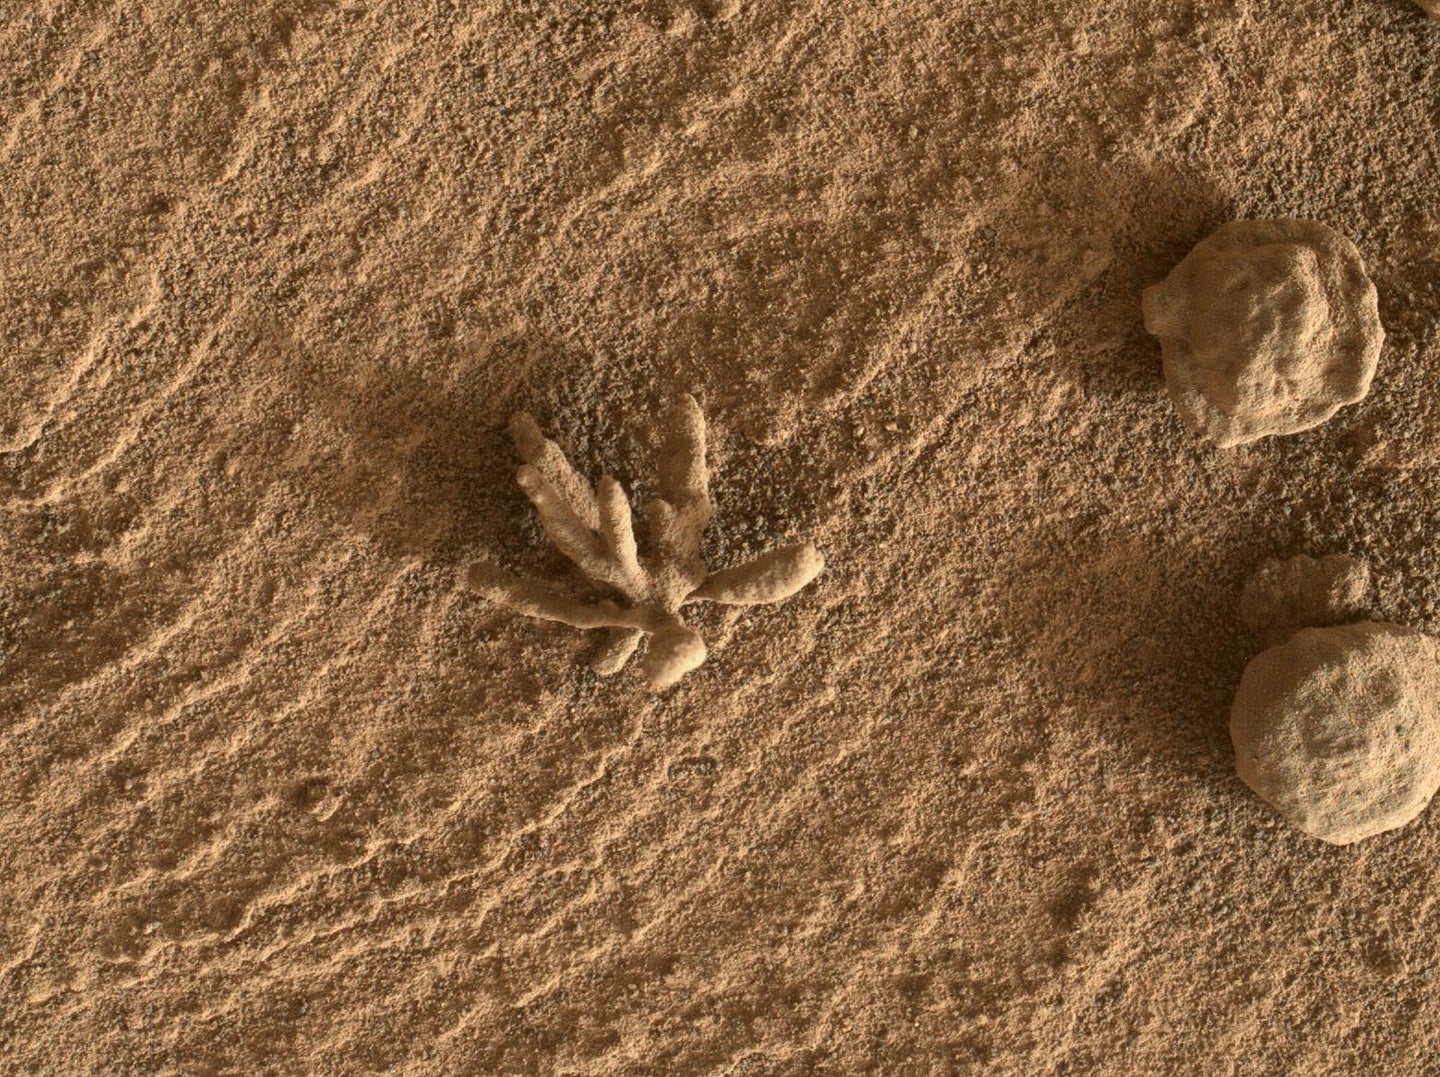 Mineralized deposit that looks like a spiky flower in the red Mars soil